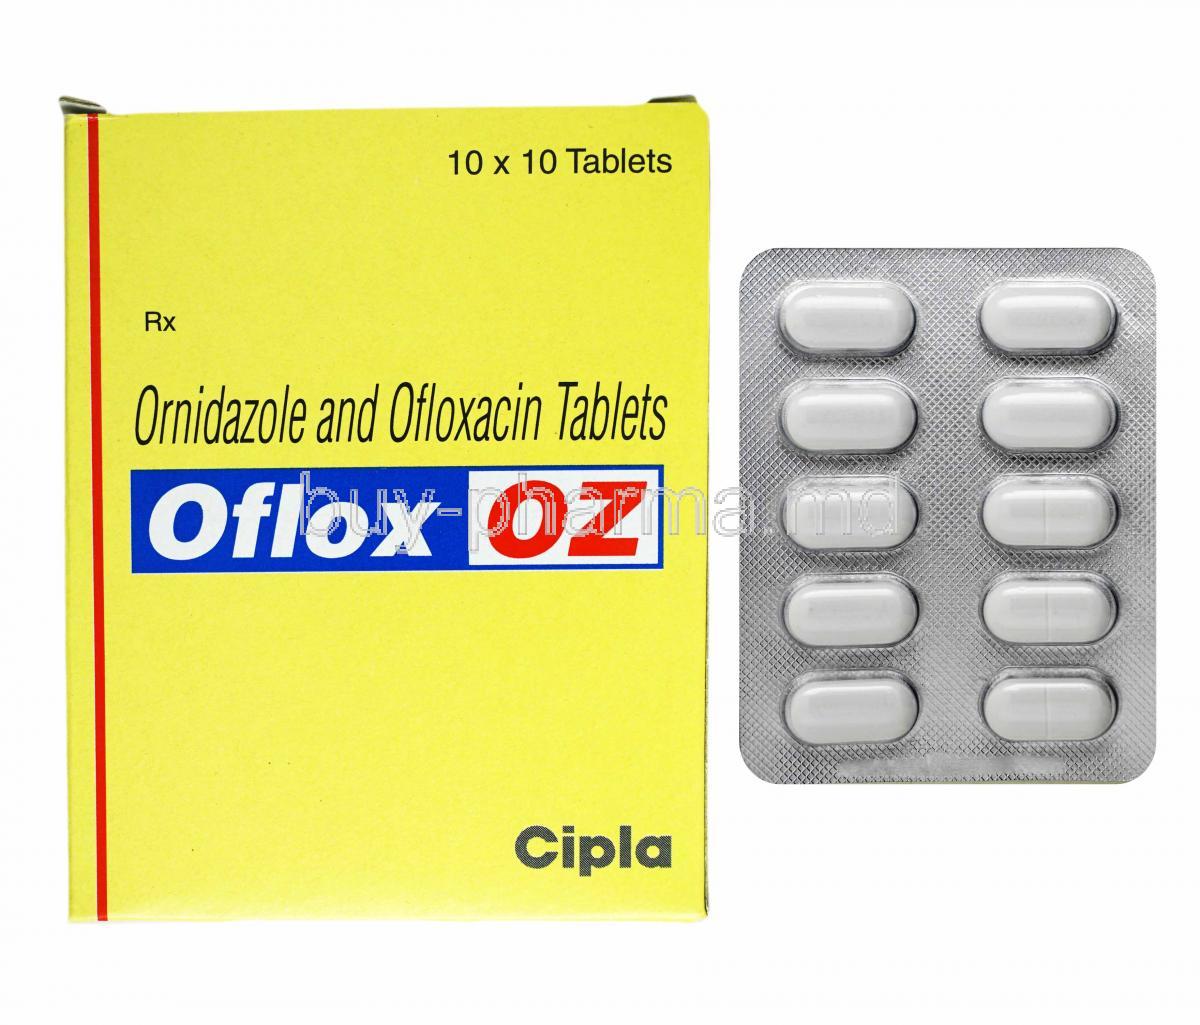 Oflox OZ, Ofloxacin and Ornidazole box and tablets